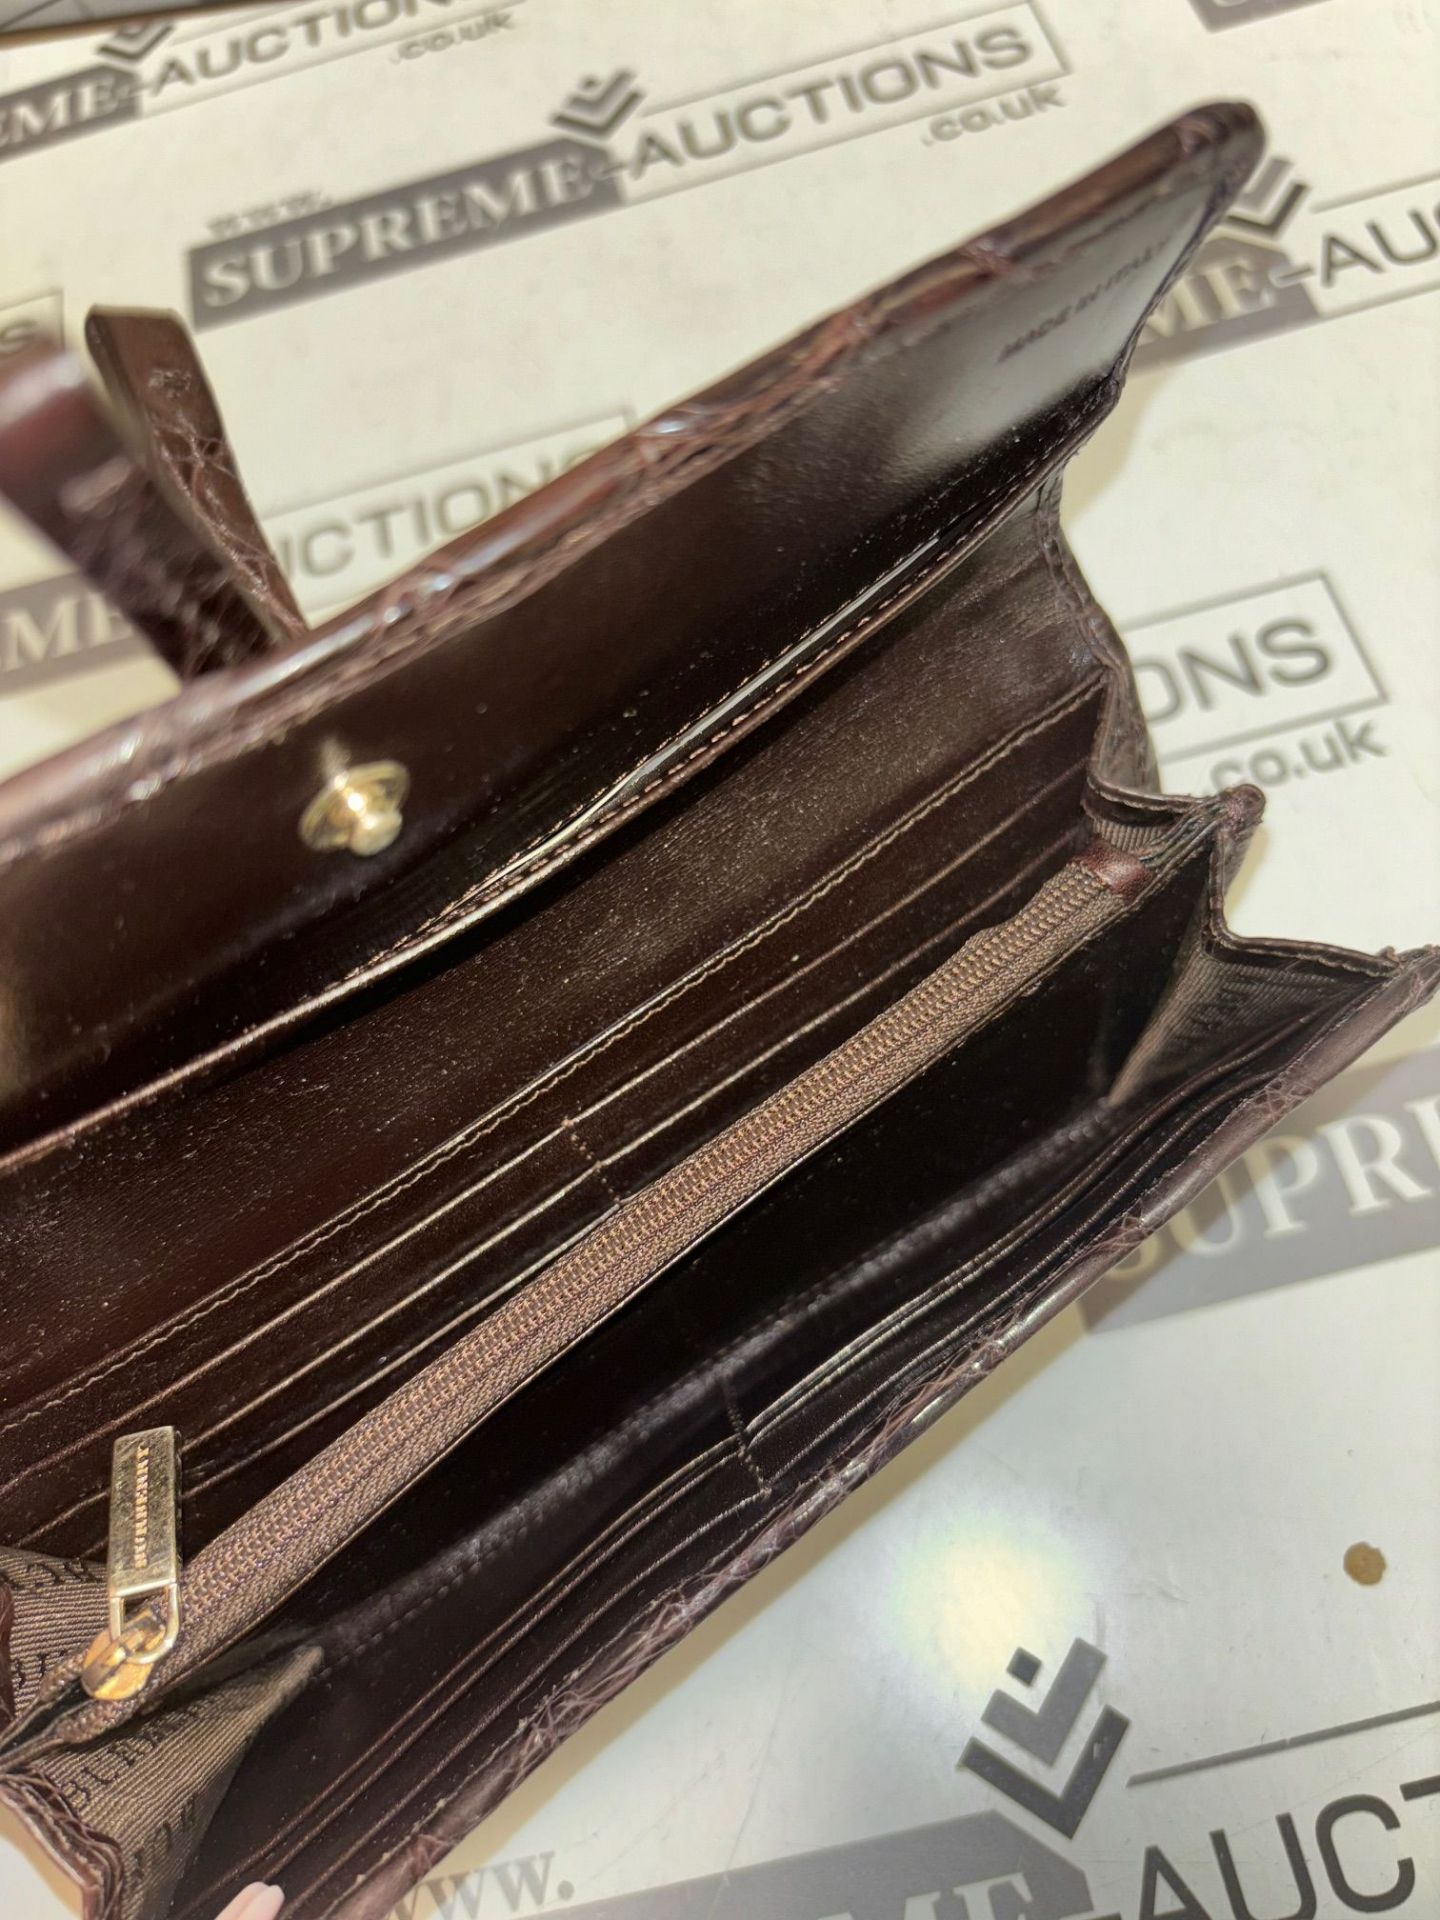 Genuine Burberry Nova Check Croc Leather Trim Wallet Purse. RRP £150. - Image 5 of 5